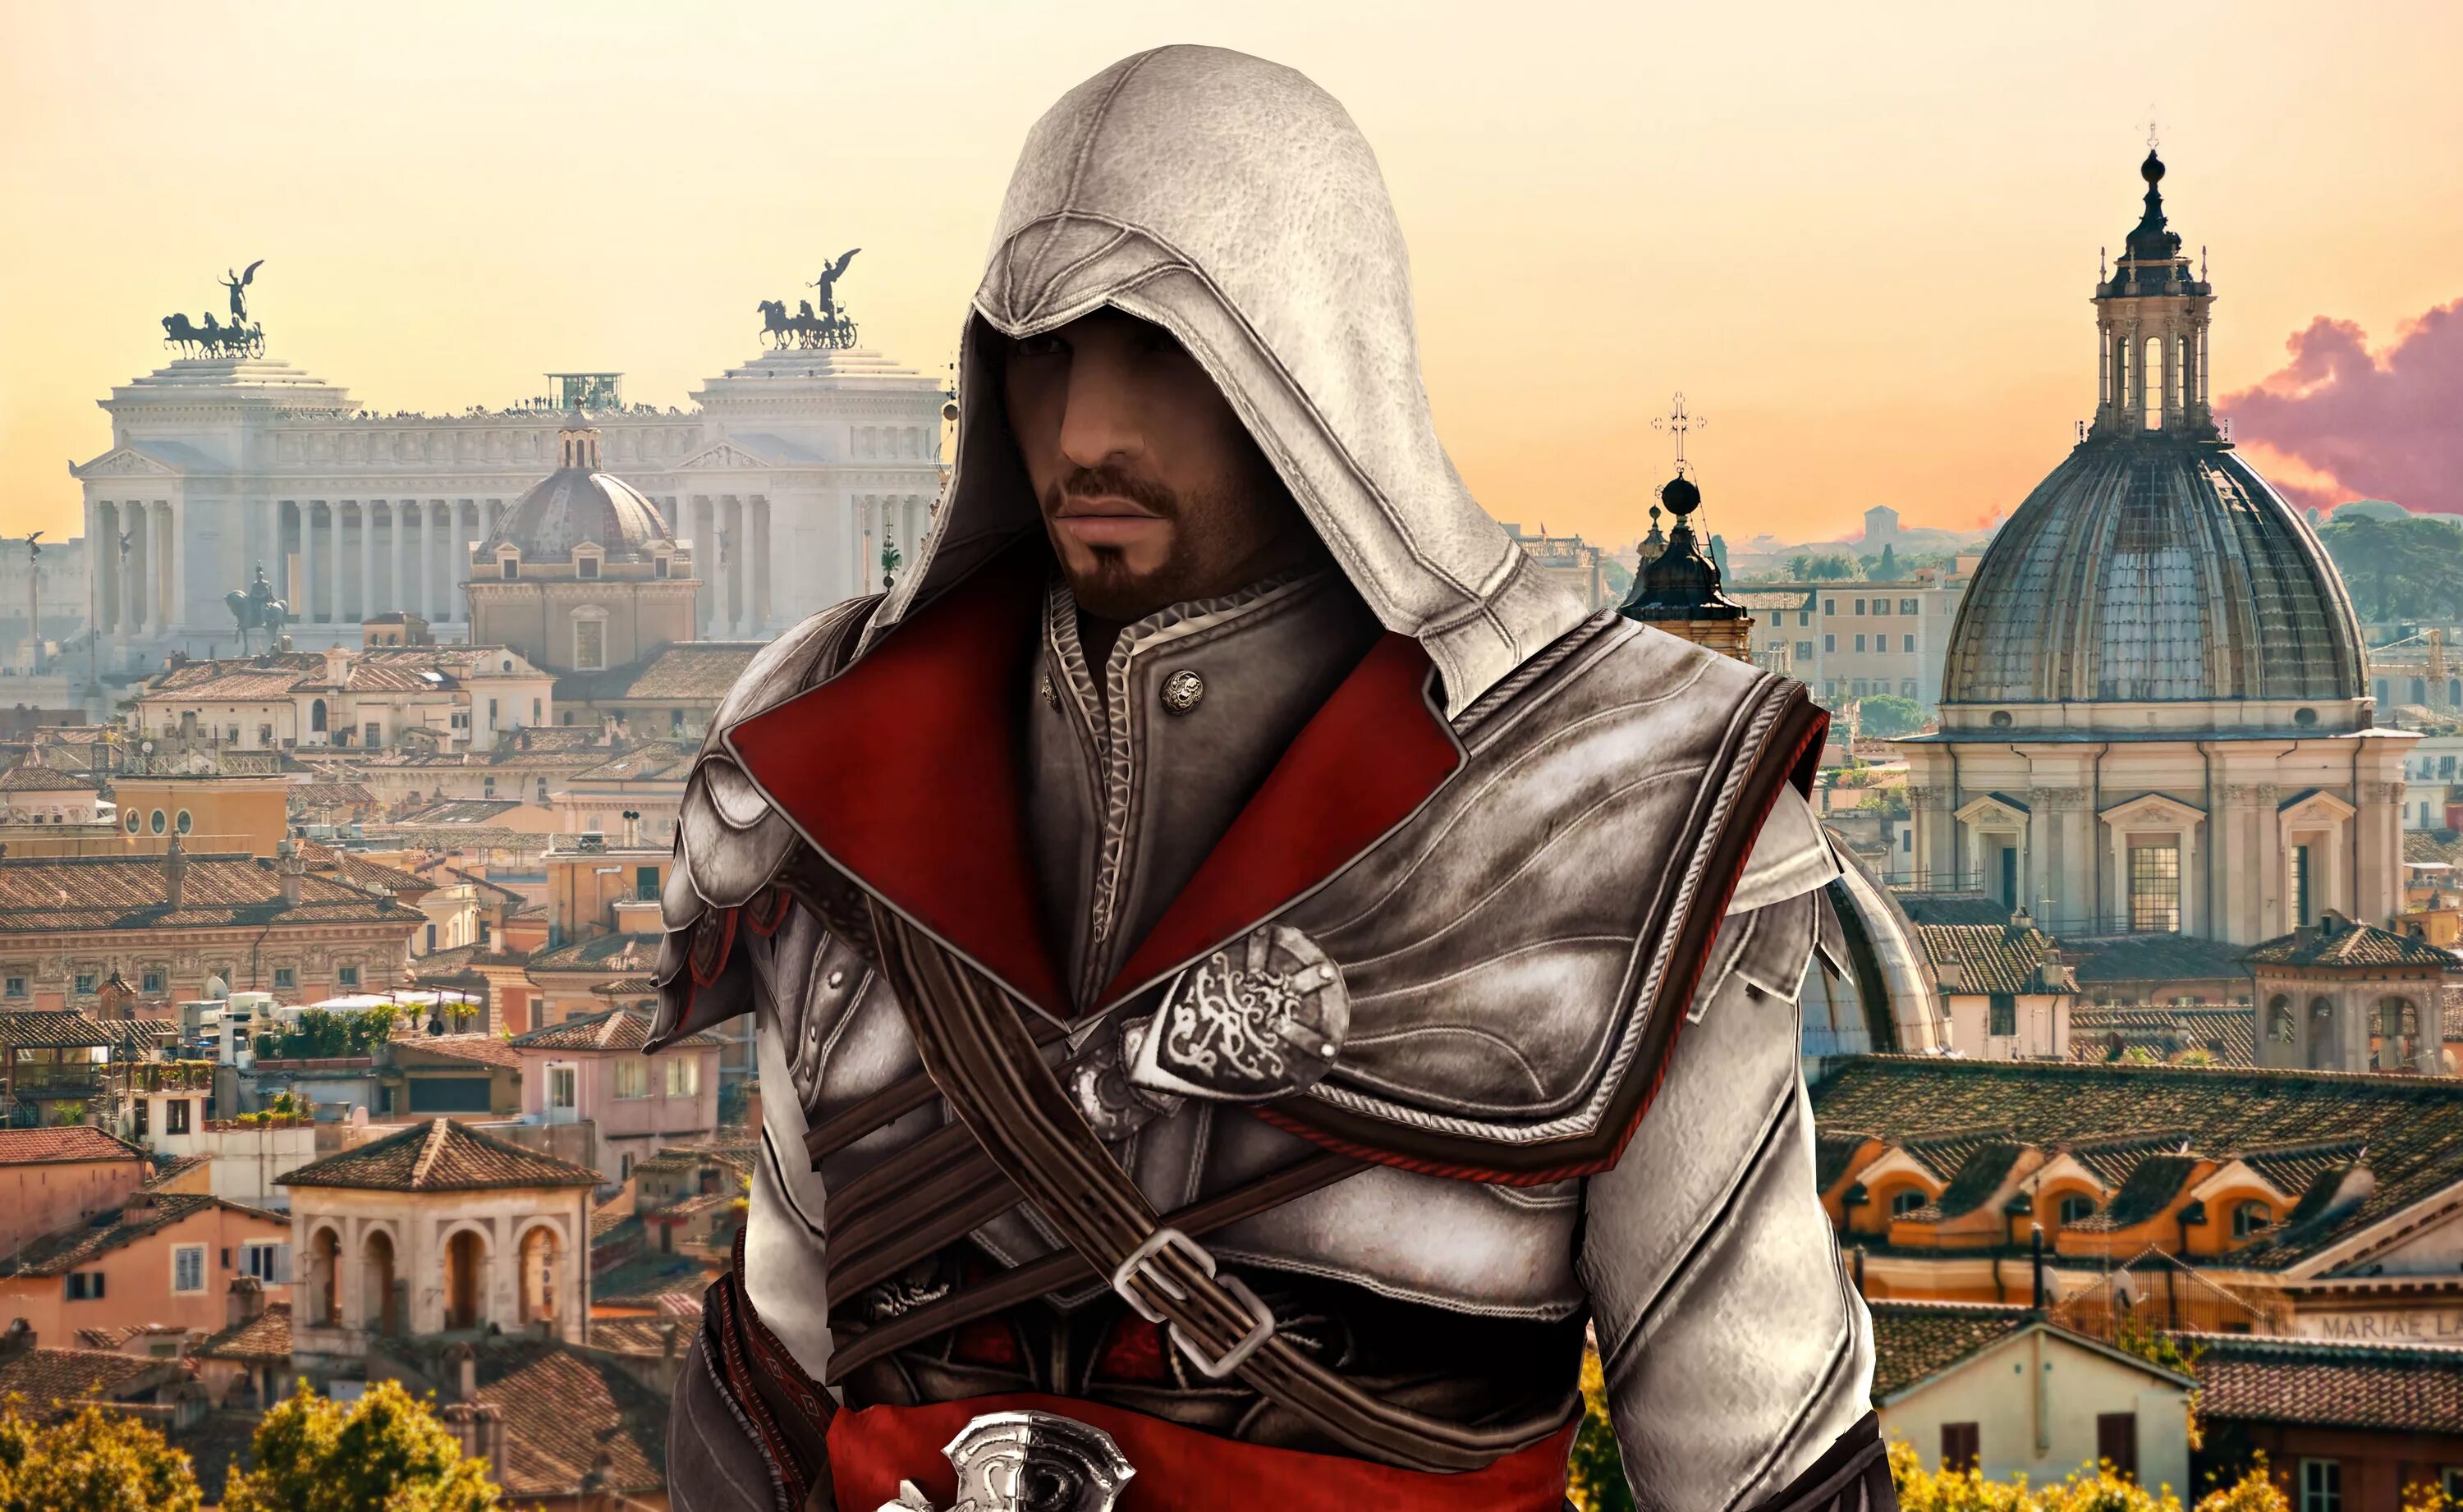 Assassin's Creed Эцио. Assassin's Creed 2 Эцио. Эцио Аудиторе. Ассасин Крид 2 Эцио Аудиторе. Assassins creed